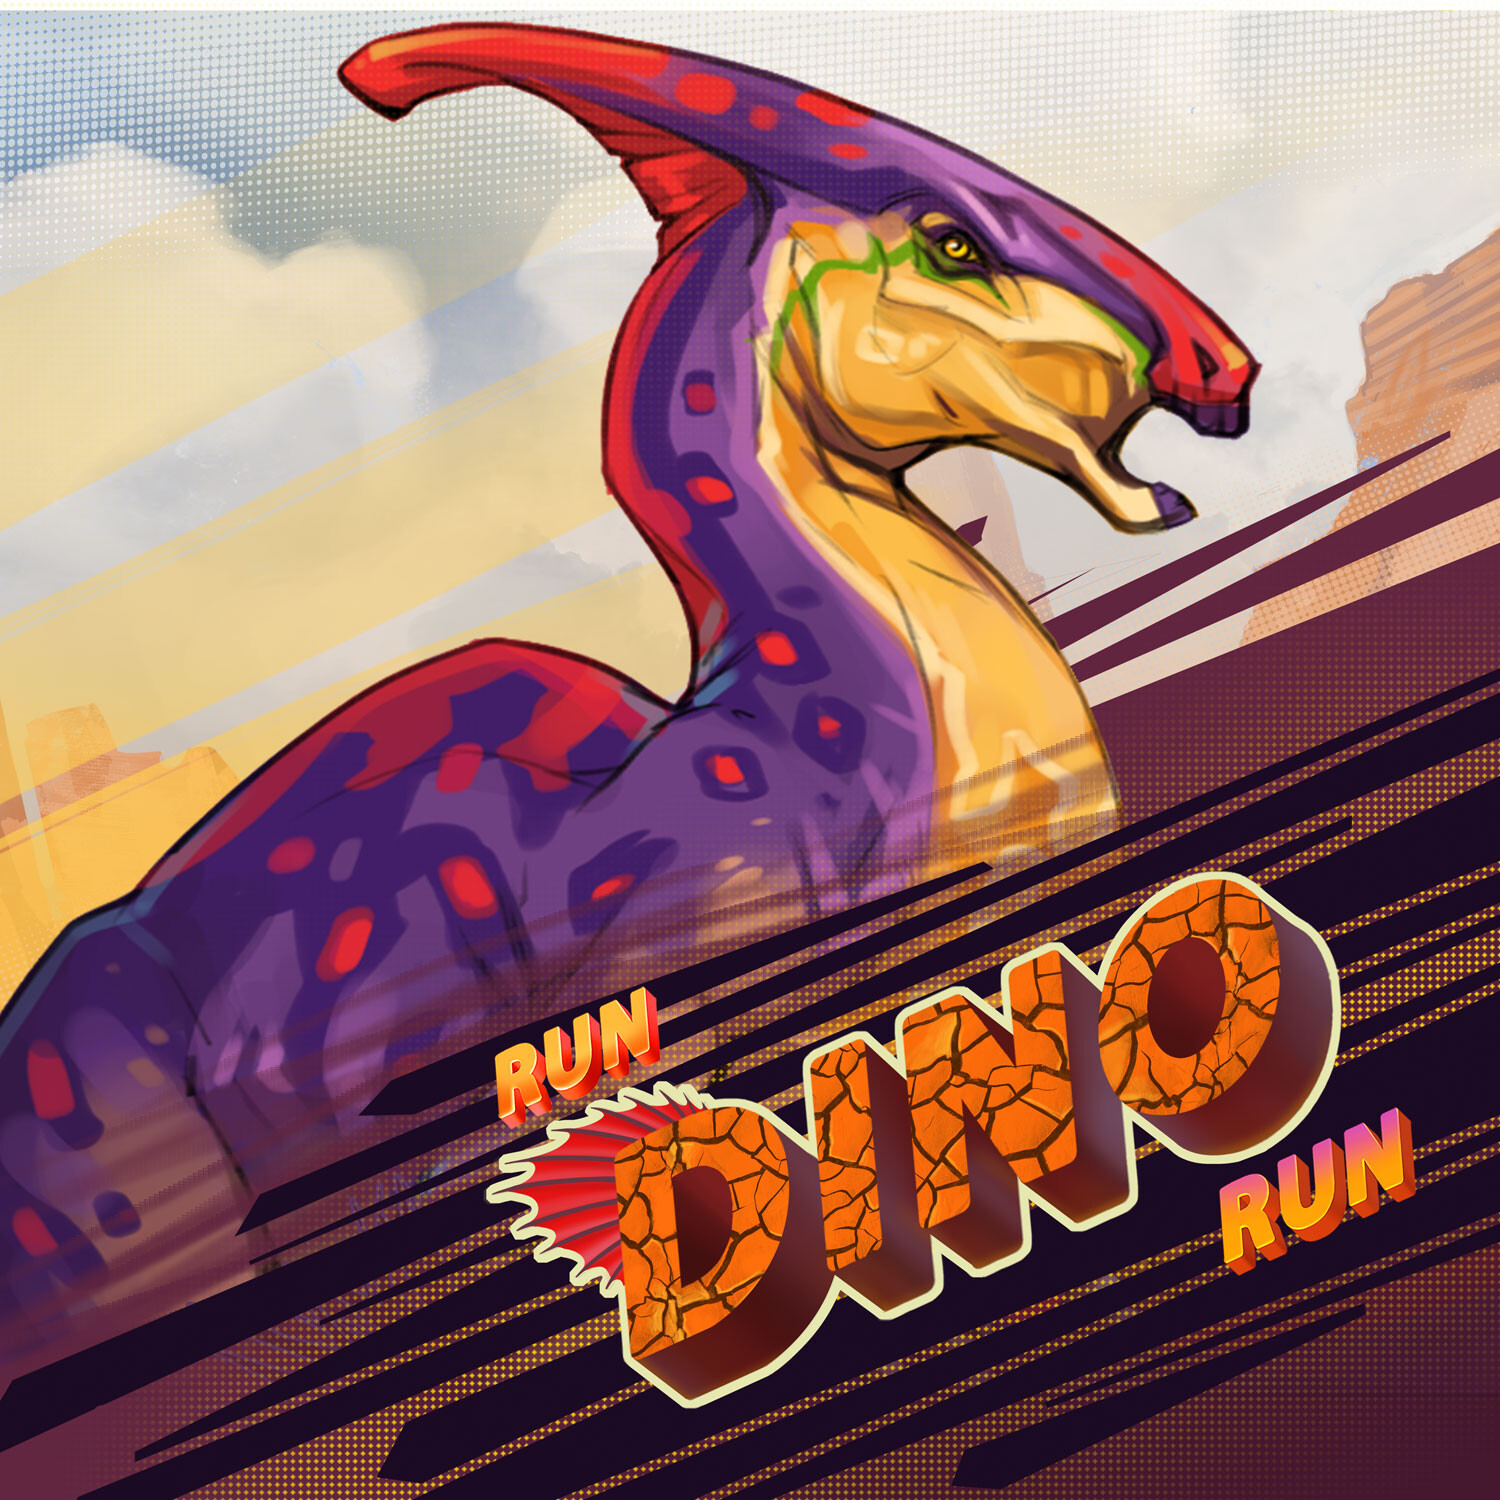 Dino Run SE (UNOFFICIAL) by Drogdiller's Games - Game Jolt